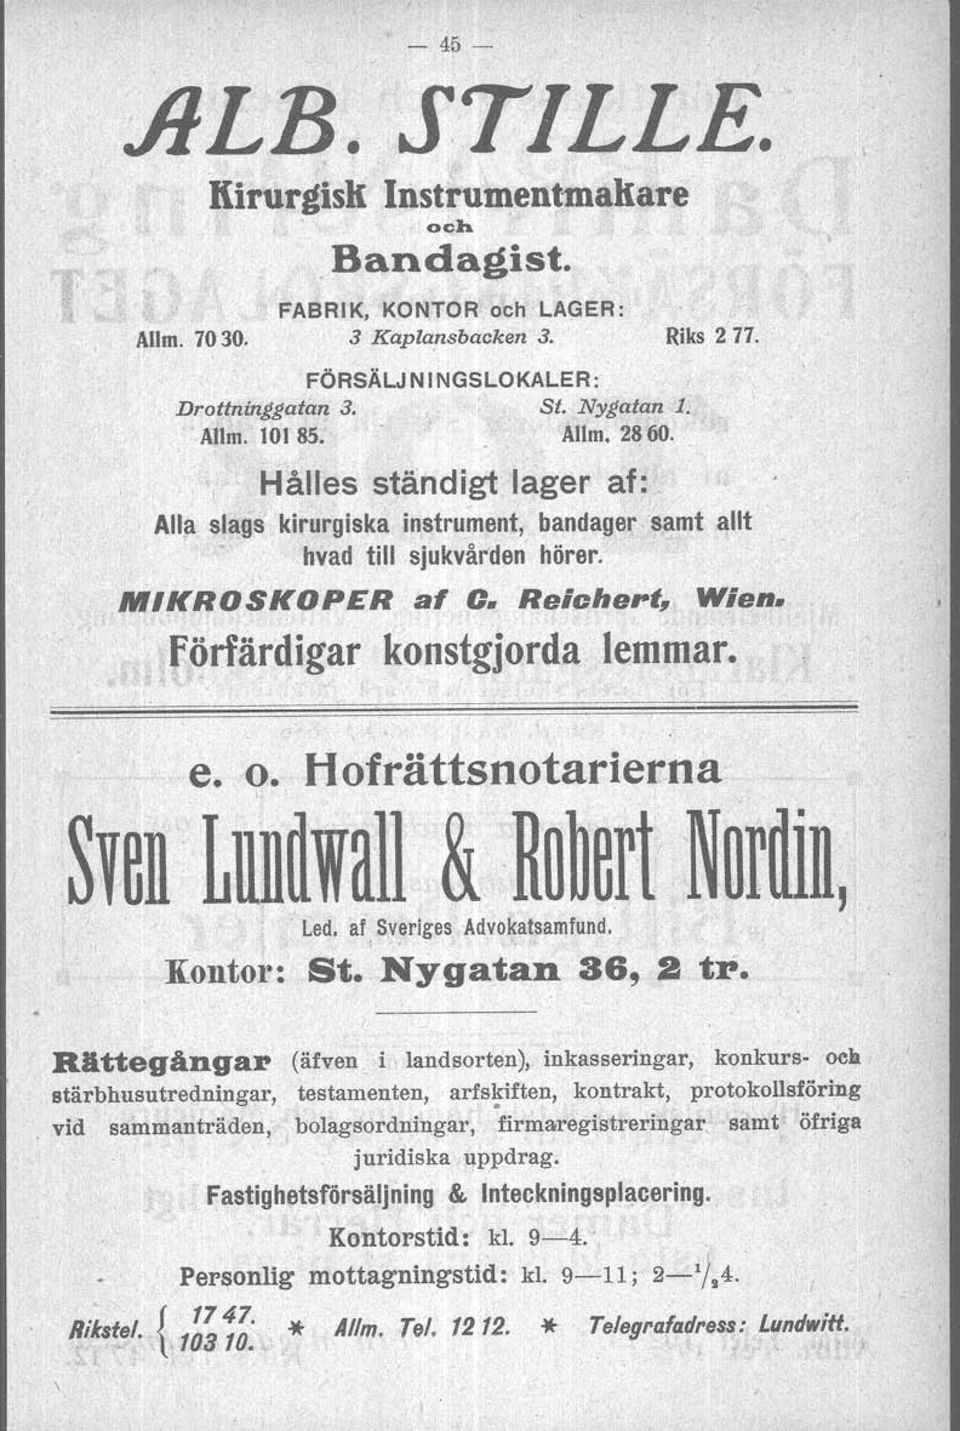 Hofrättsnotarierna - Led. af Sveriges Advokatsamfund. Kontor: St. Nygatan 86, 2 tr.